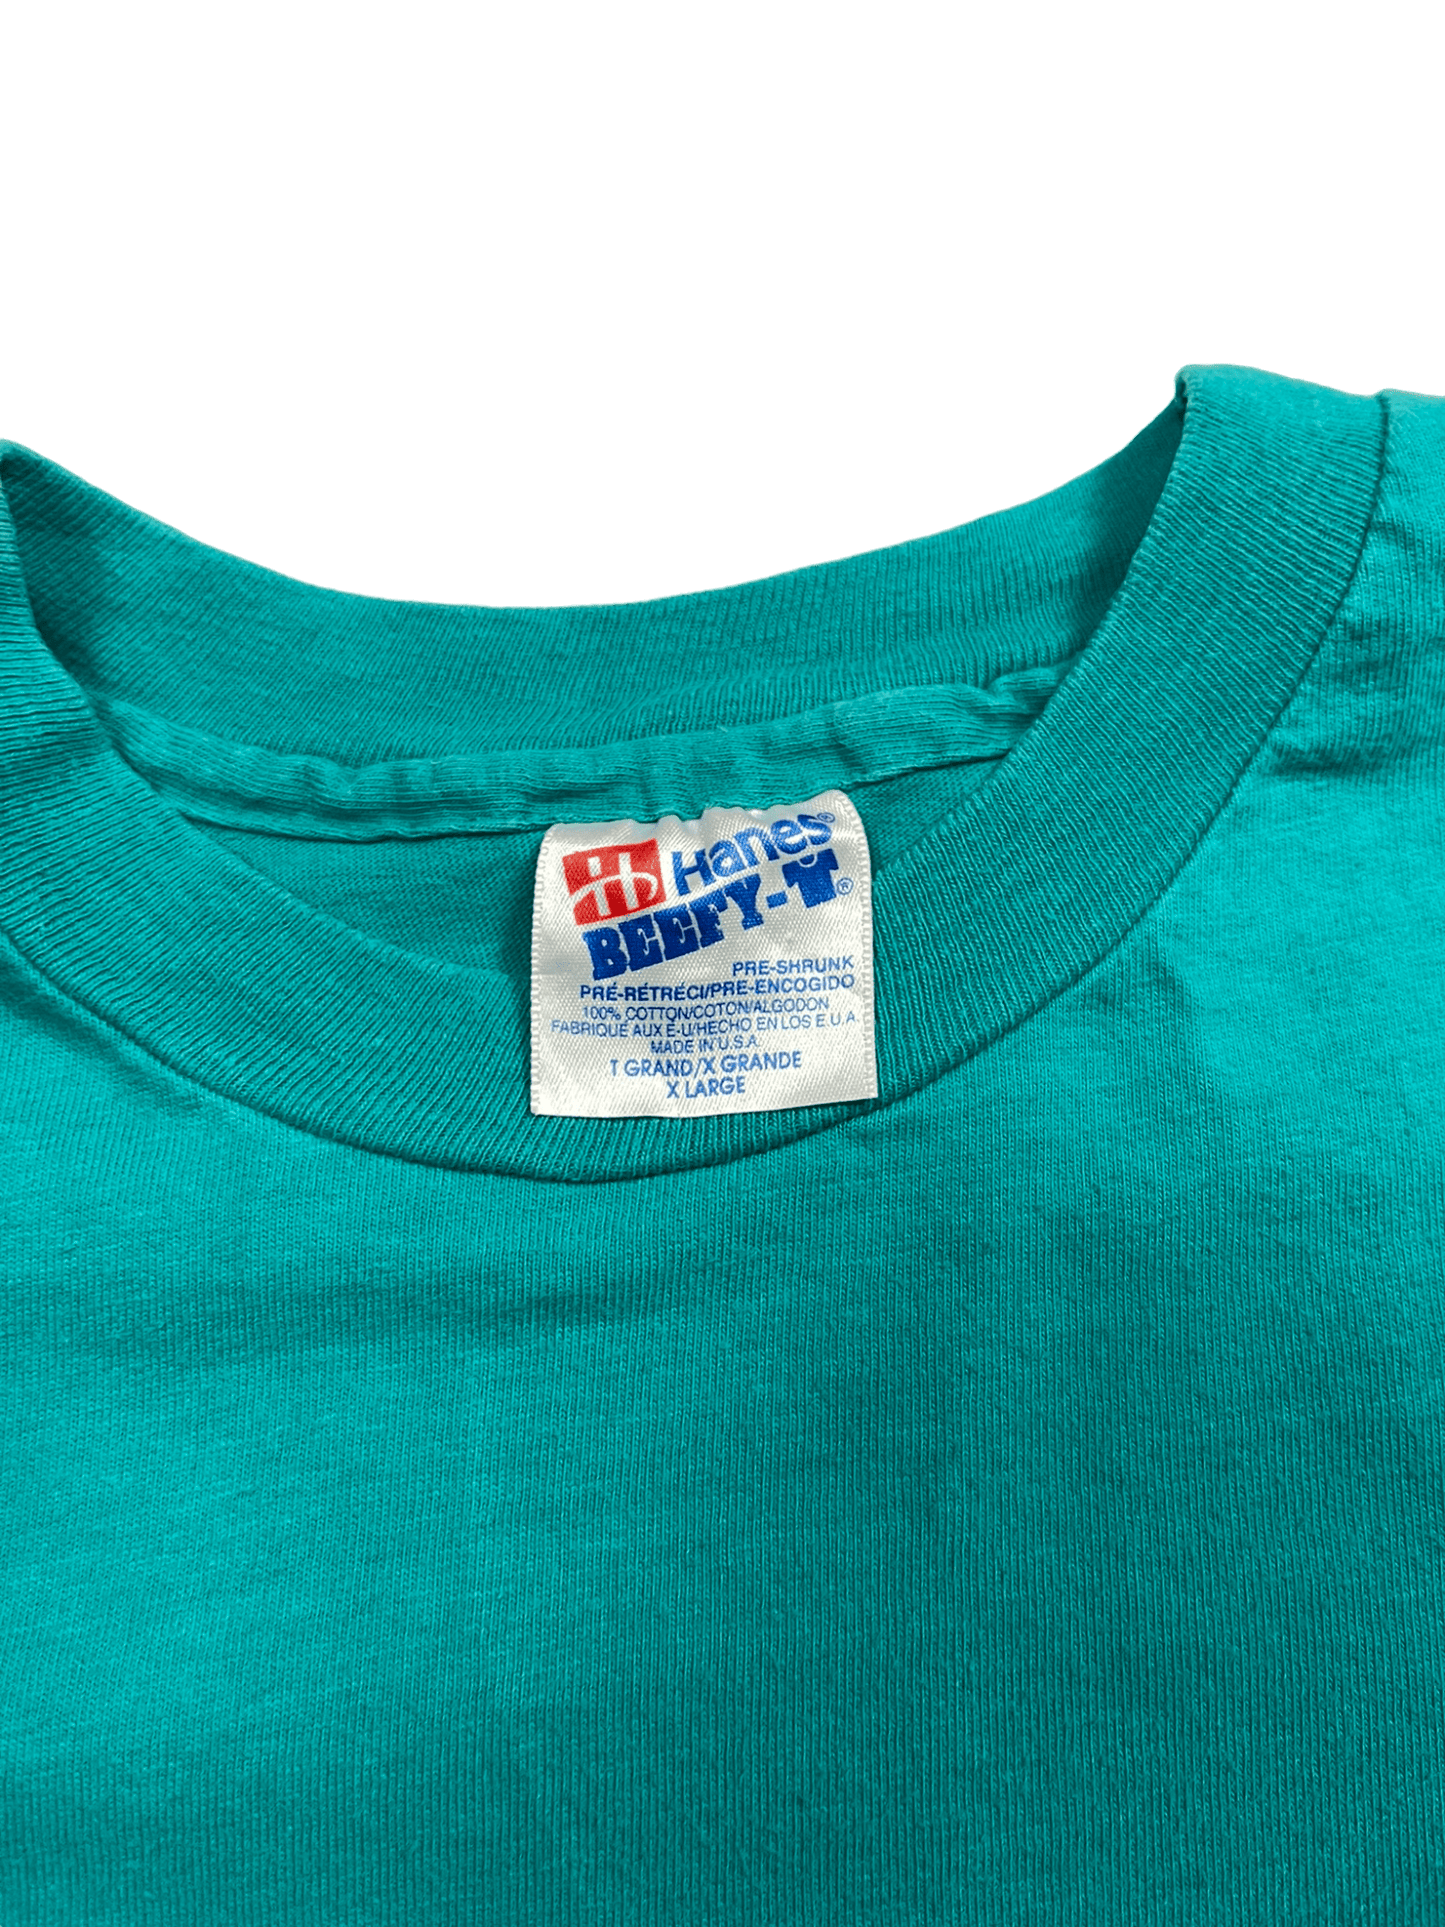 The Vintage Racks T-Shirt TimberNest™ - XL